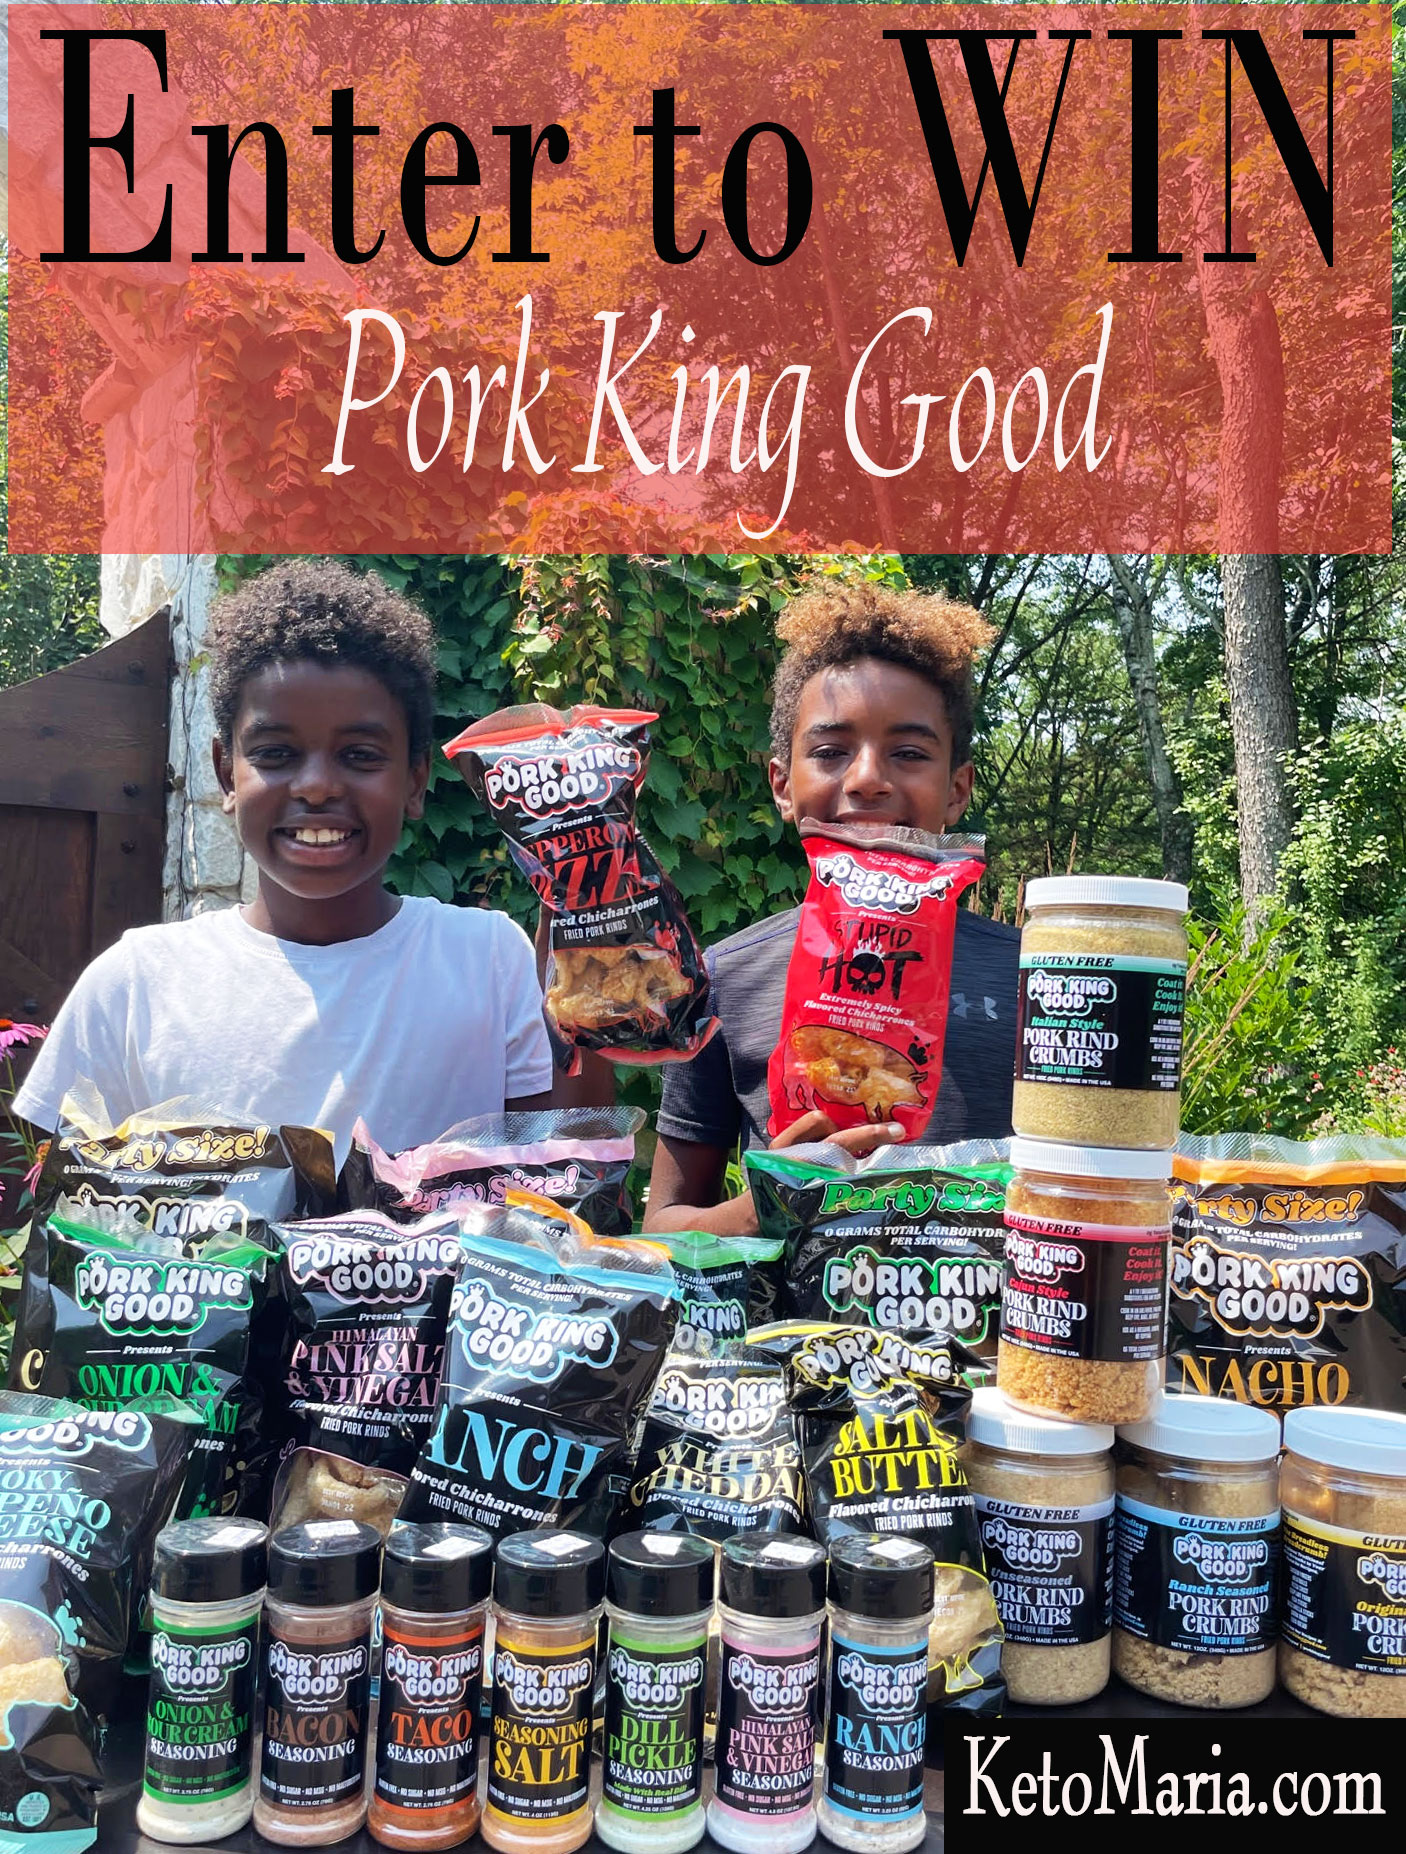 Pork King Good Original Pork Rind Crumbs 